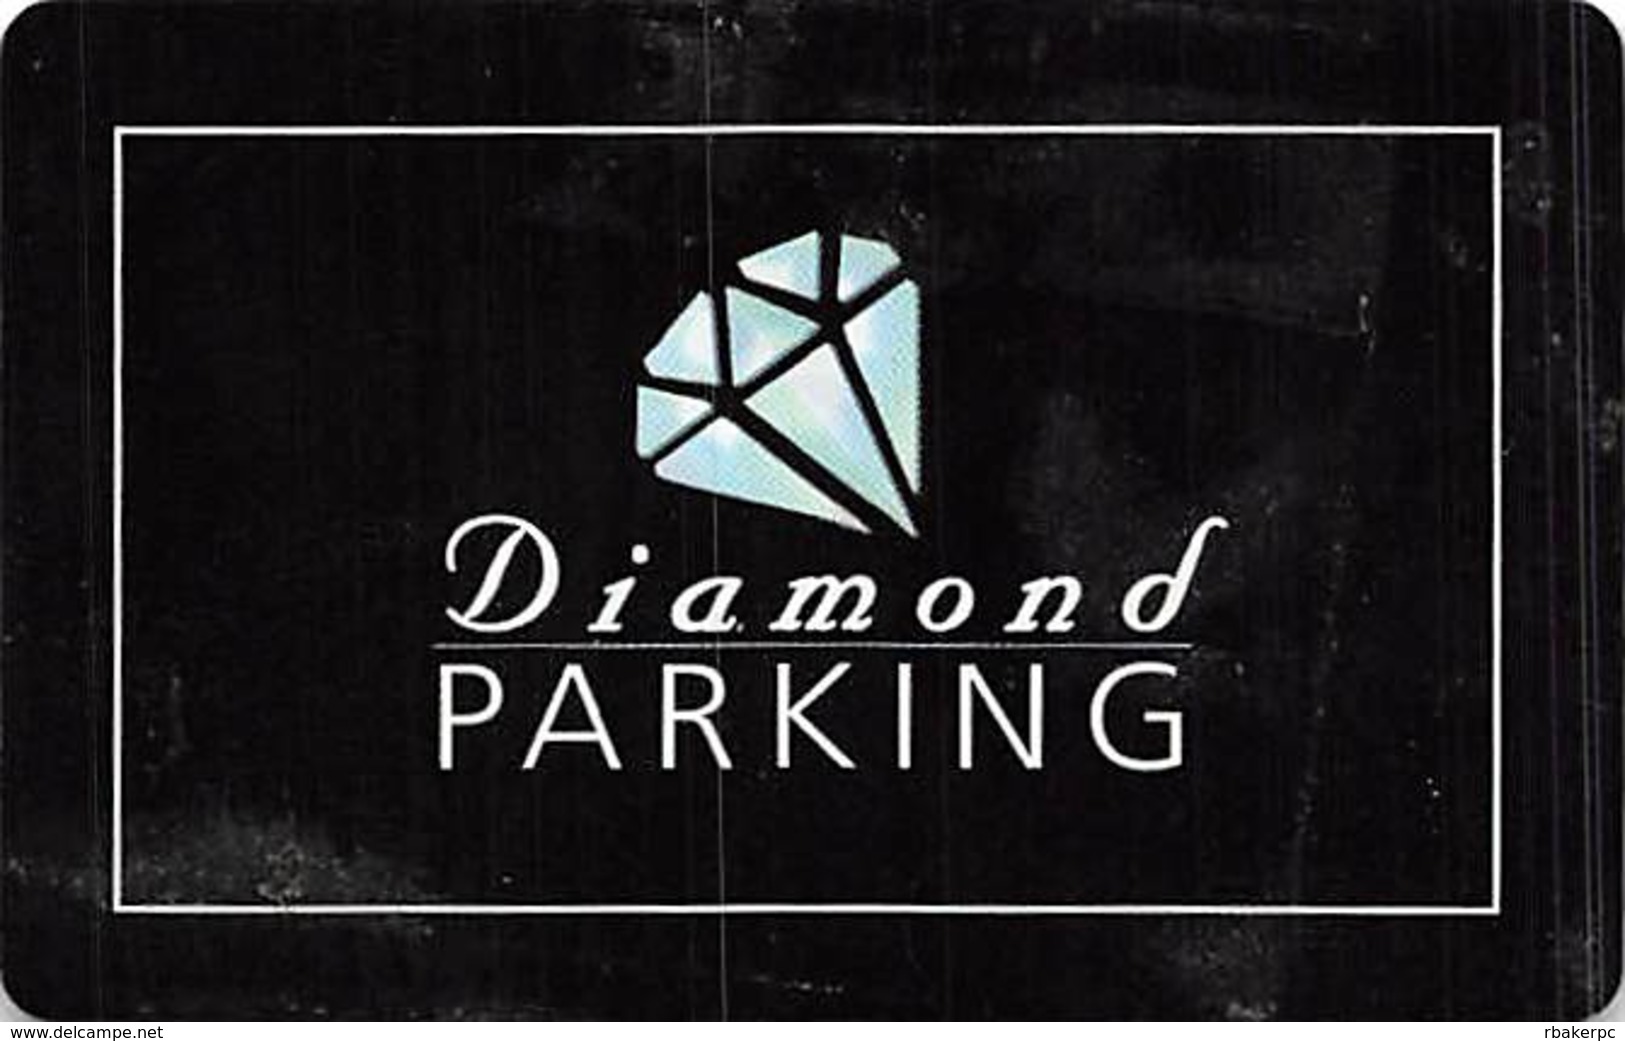 Harrah's Casino St. Louis, MO 2006 Diamond Parking Card  ...[RSC]... - Casino Cards